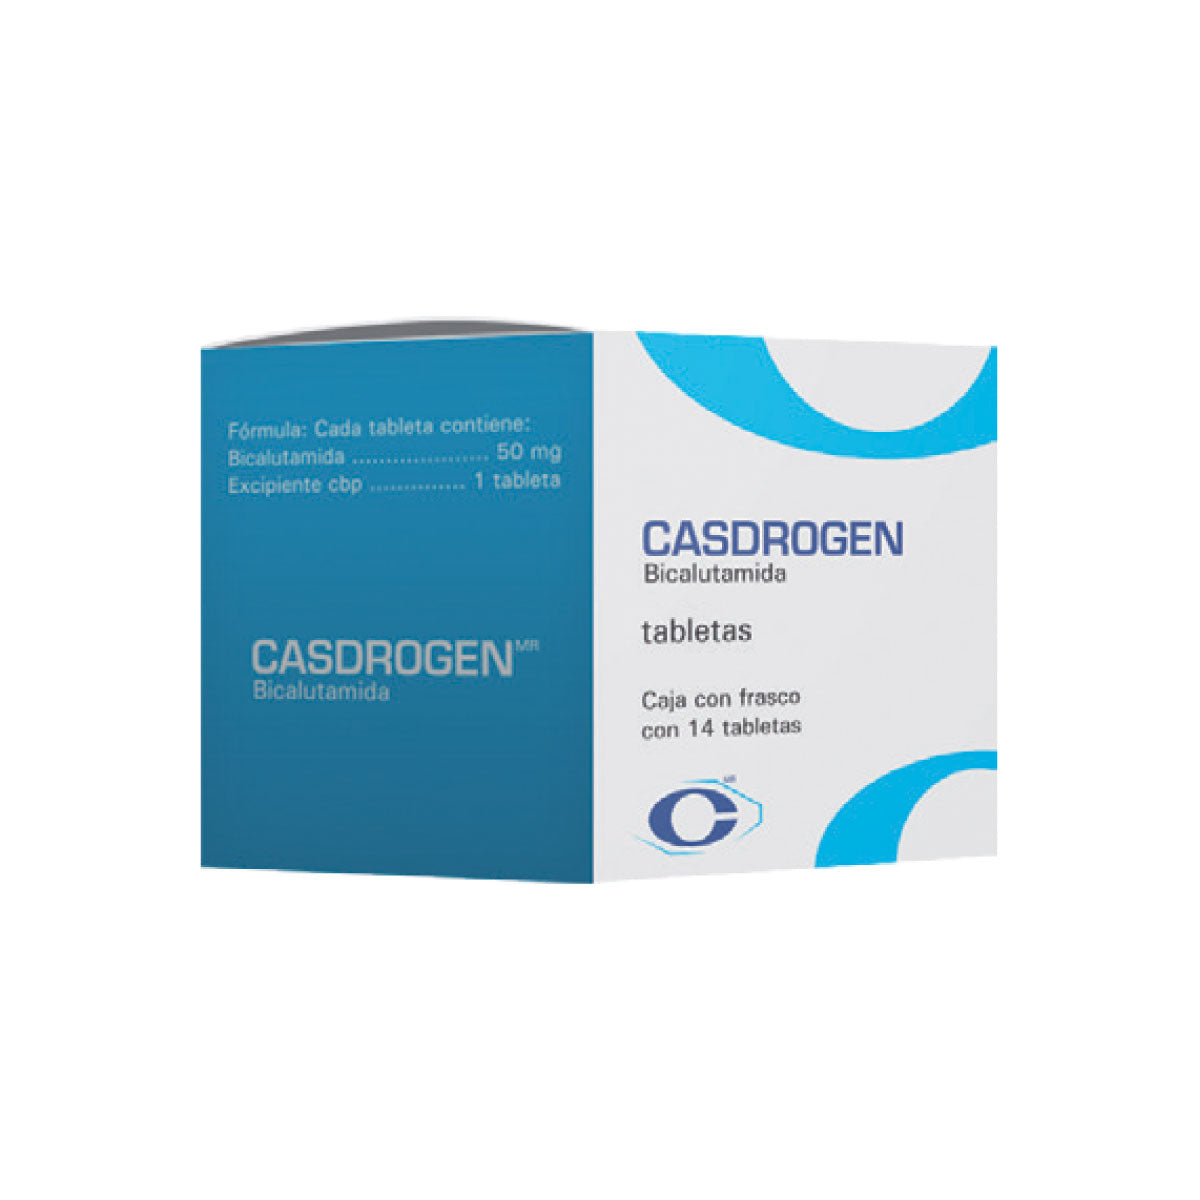 Casdrogen (Bicalutamida) Tabs 50mg Cja c 14 tabs